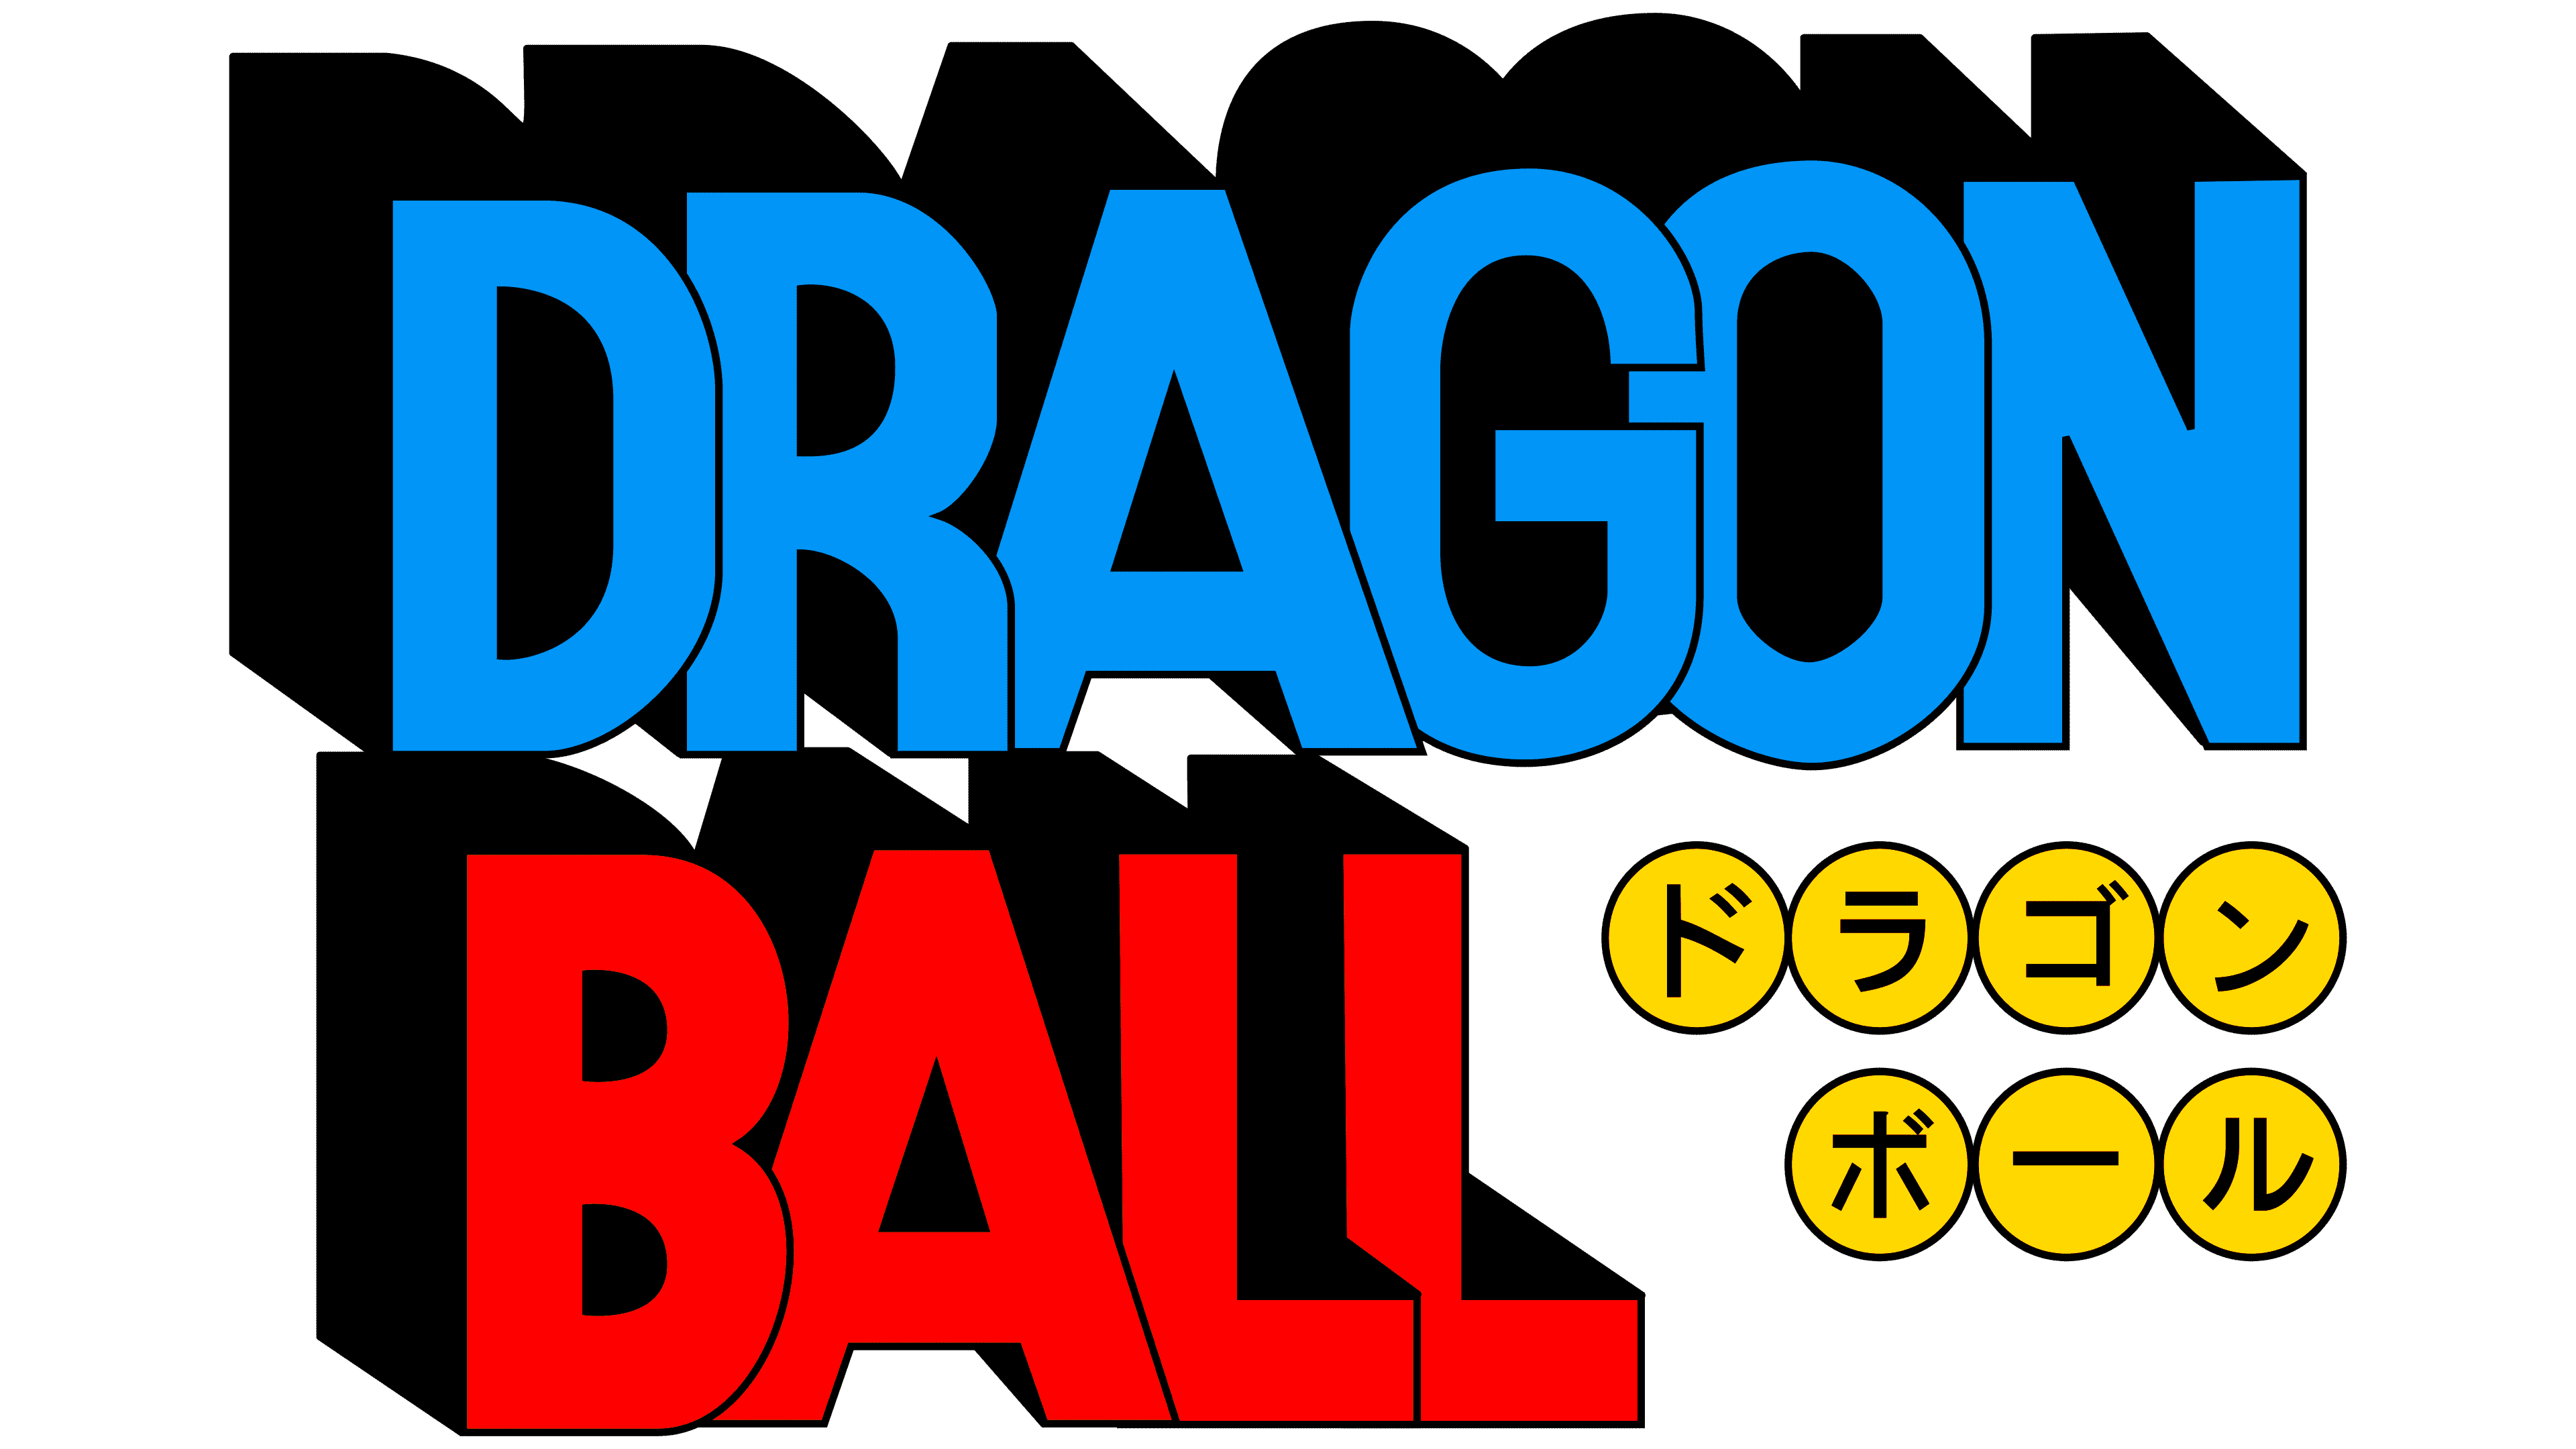 HD dragon ball logo wallpapers | Peakpx